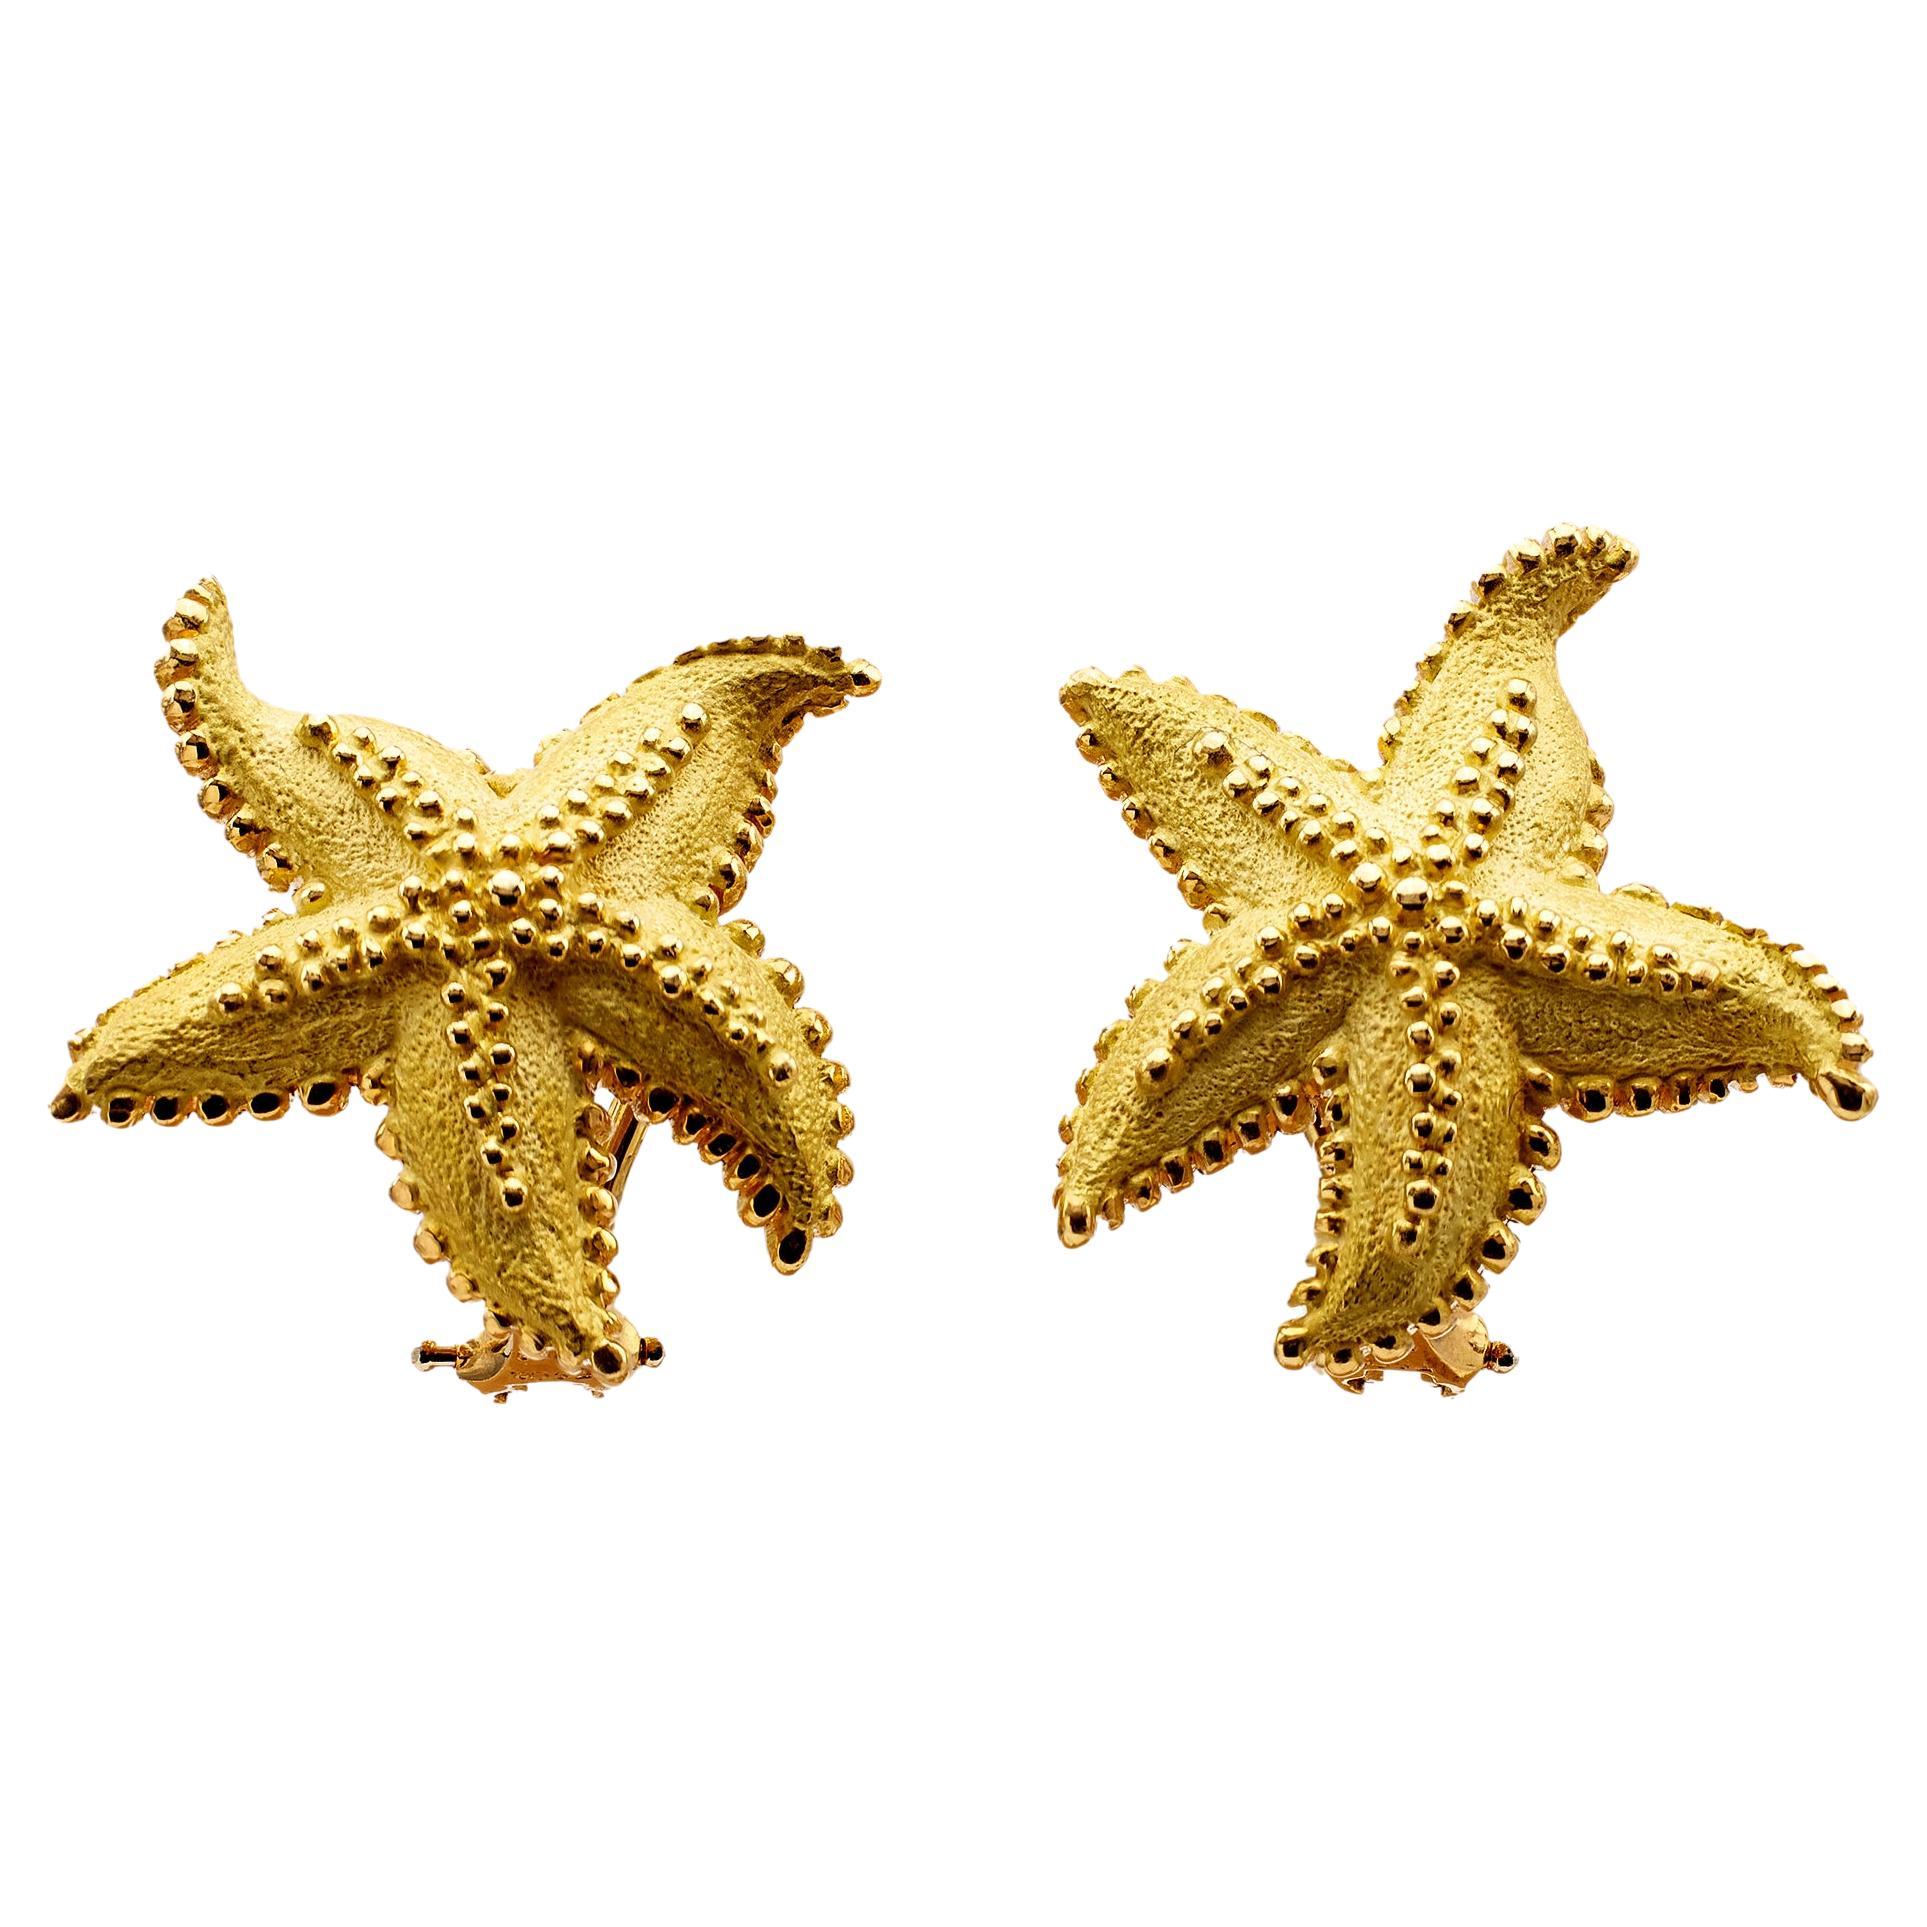 Vintage Tiffany & Co. 18k Yellow Gold Starfish Earrings